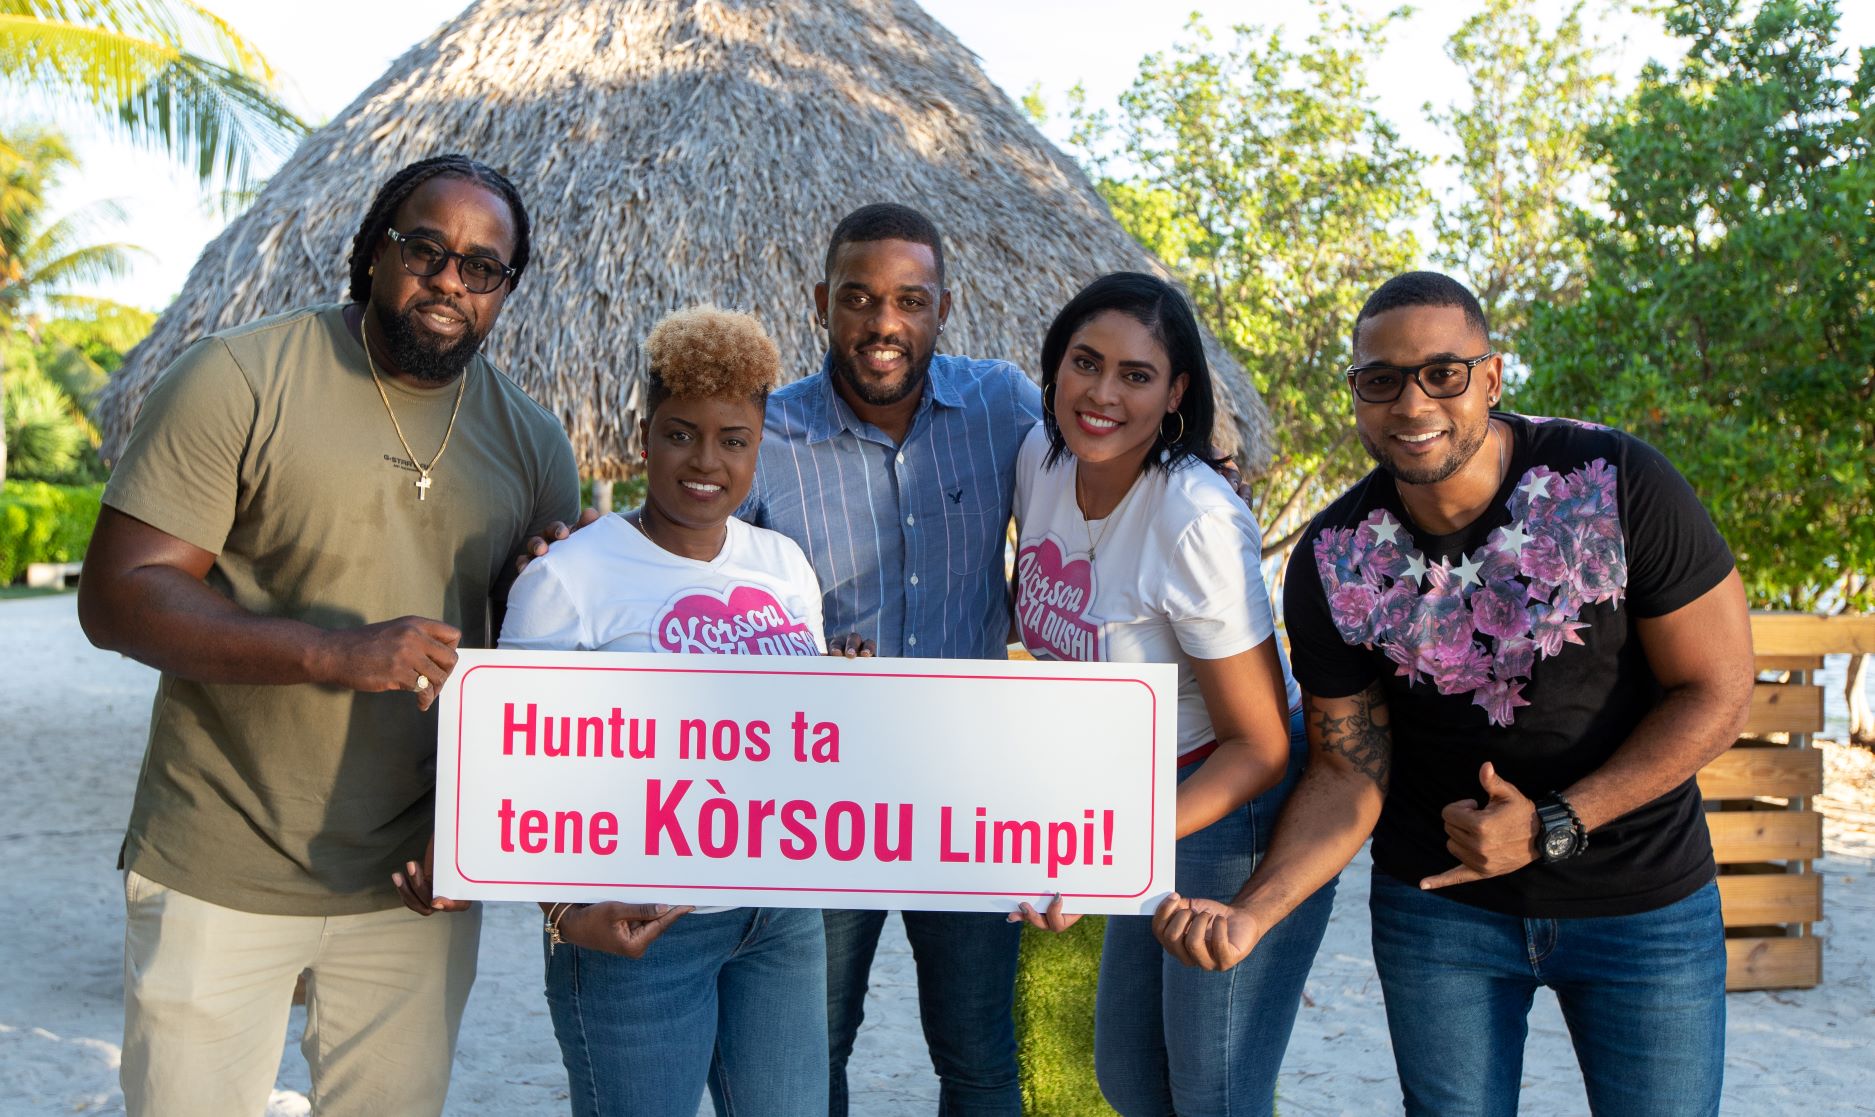 The Curaçao Tourist Board launches “Kòrsou ta dushi i limpi” awareness campaign